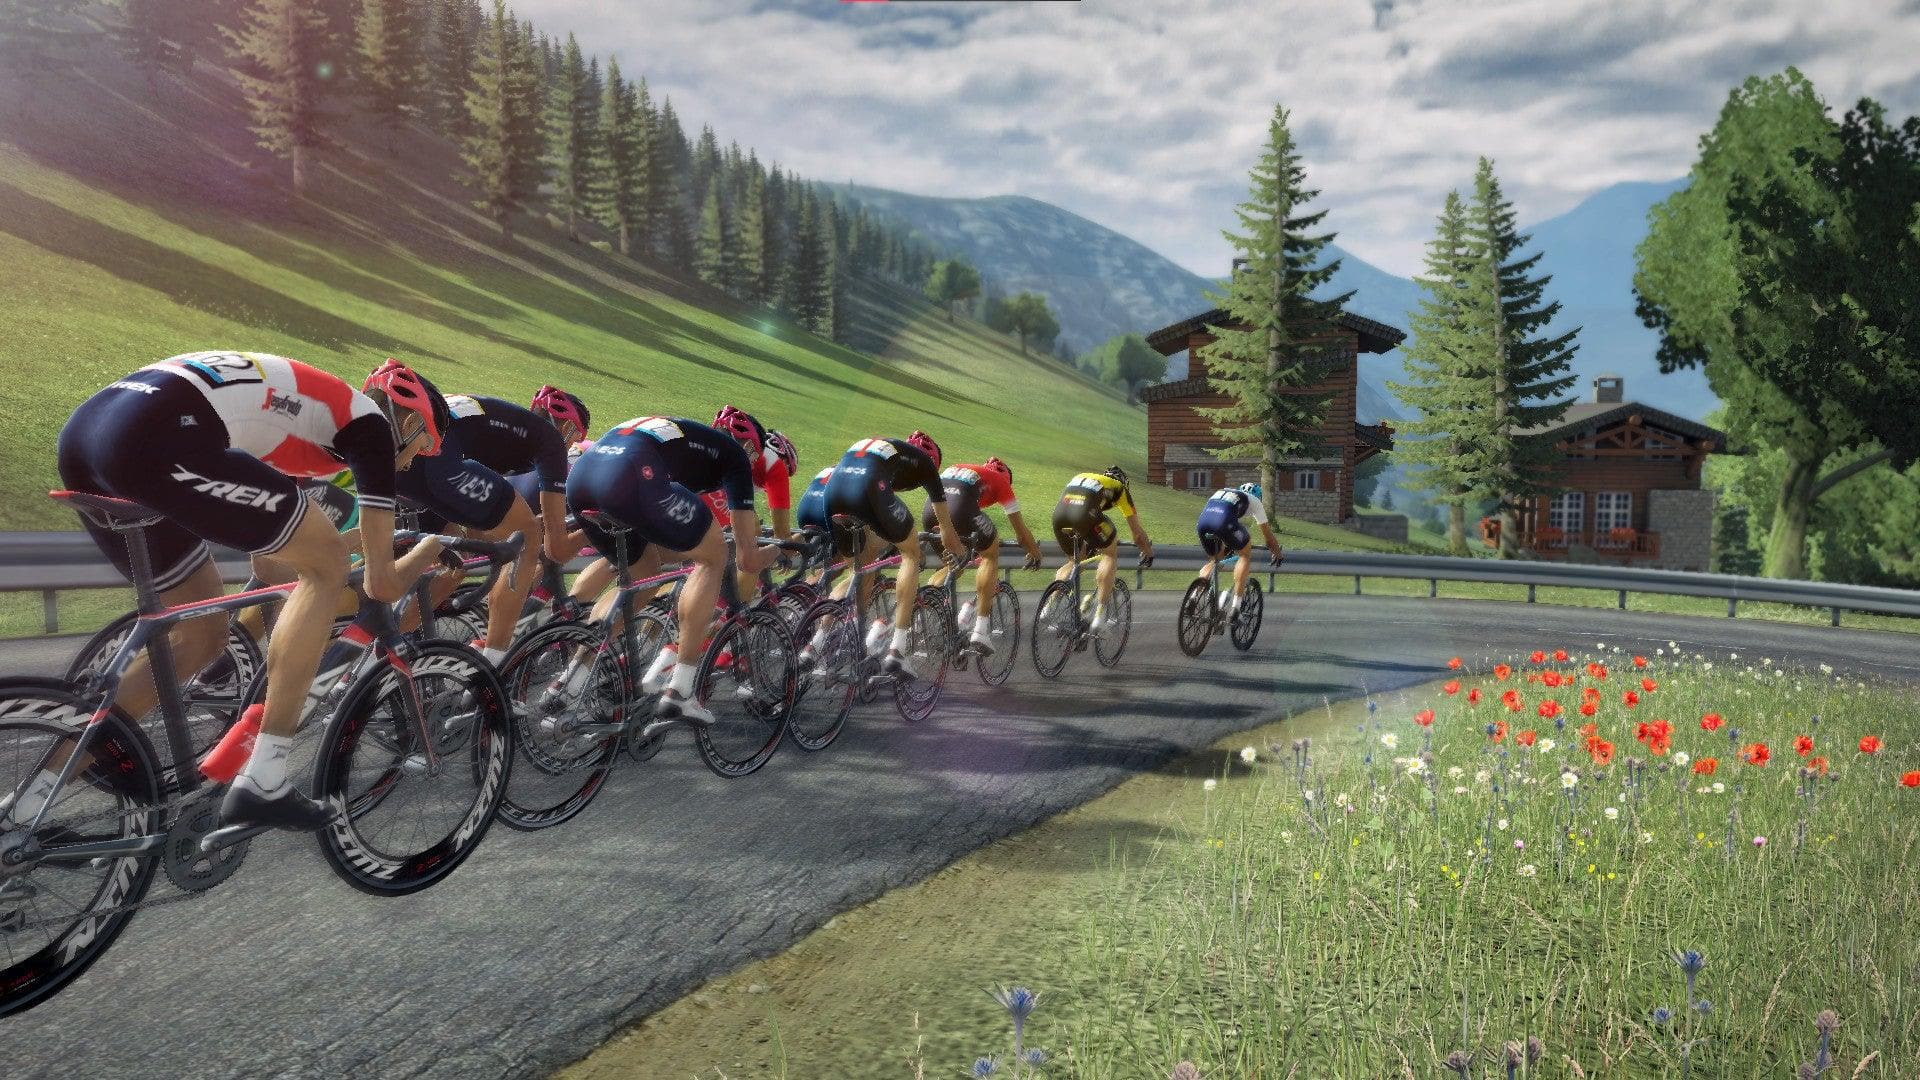 Tour de France 2021 - Xbox - EXON - גיימינג ותוכנות - משחקים ותוכנות למחשב ולאקס בוקס!